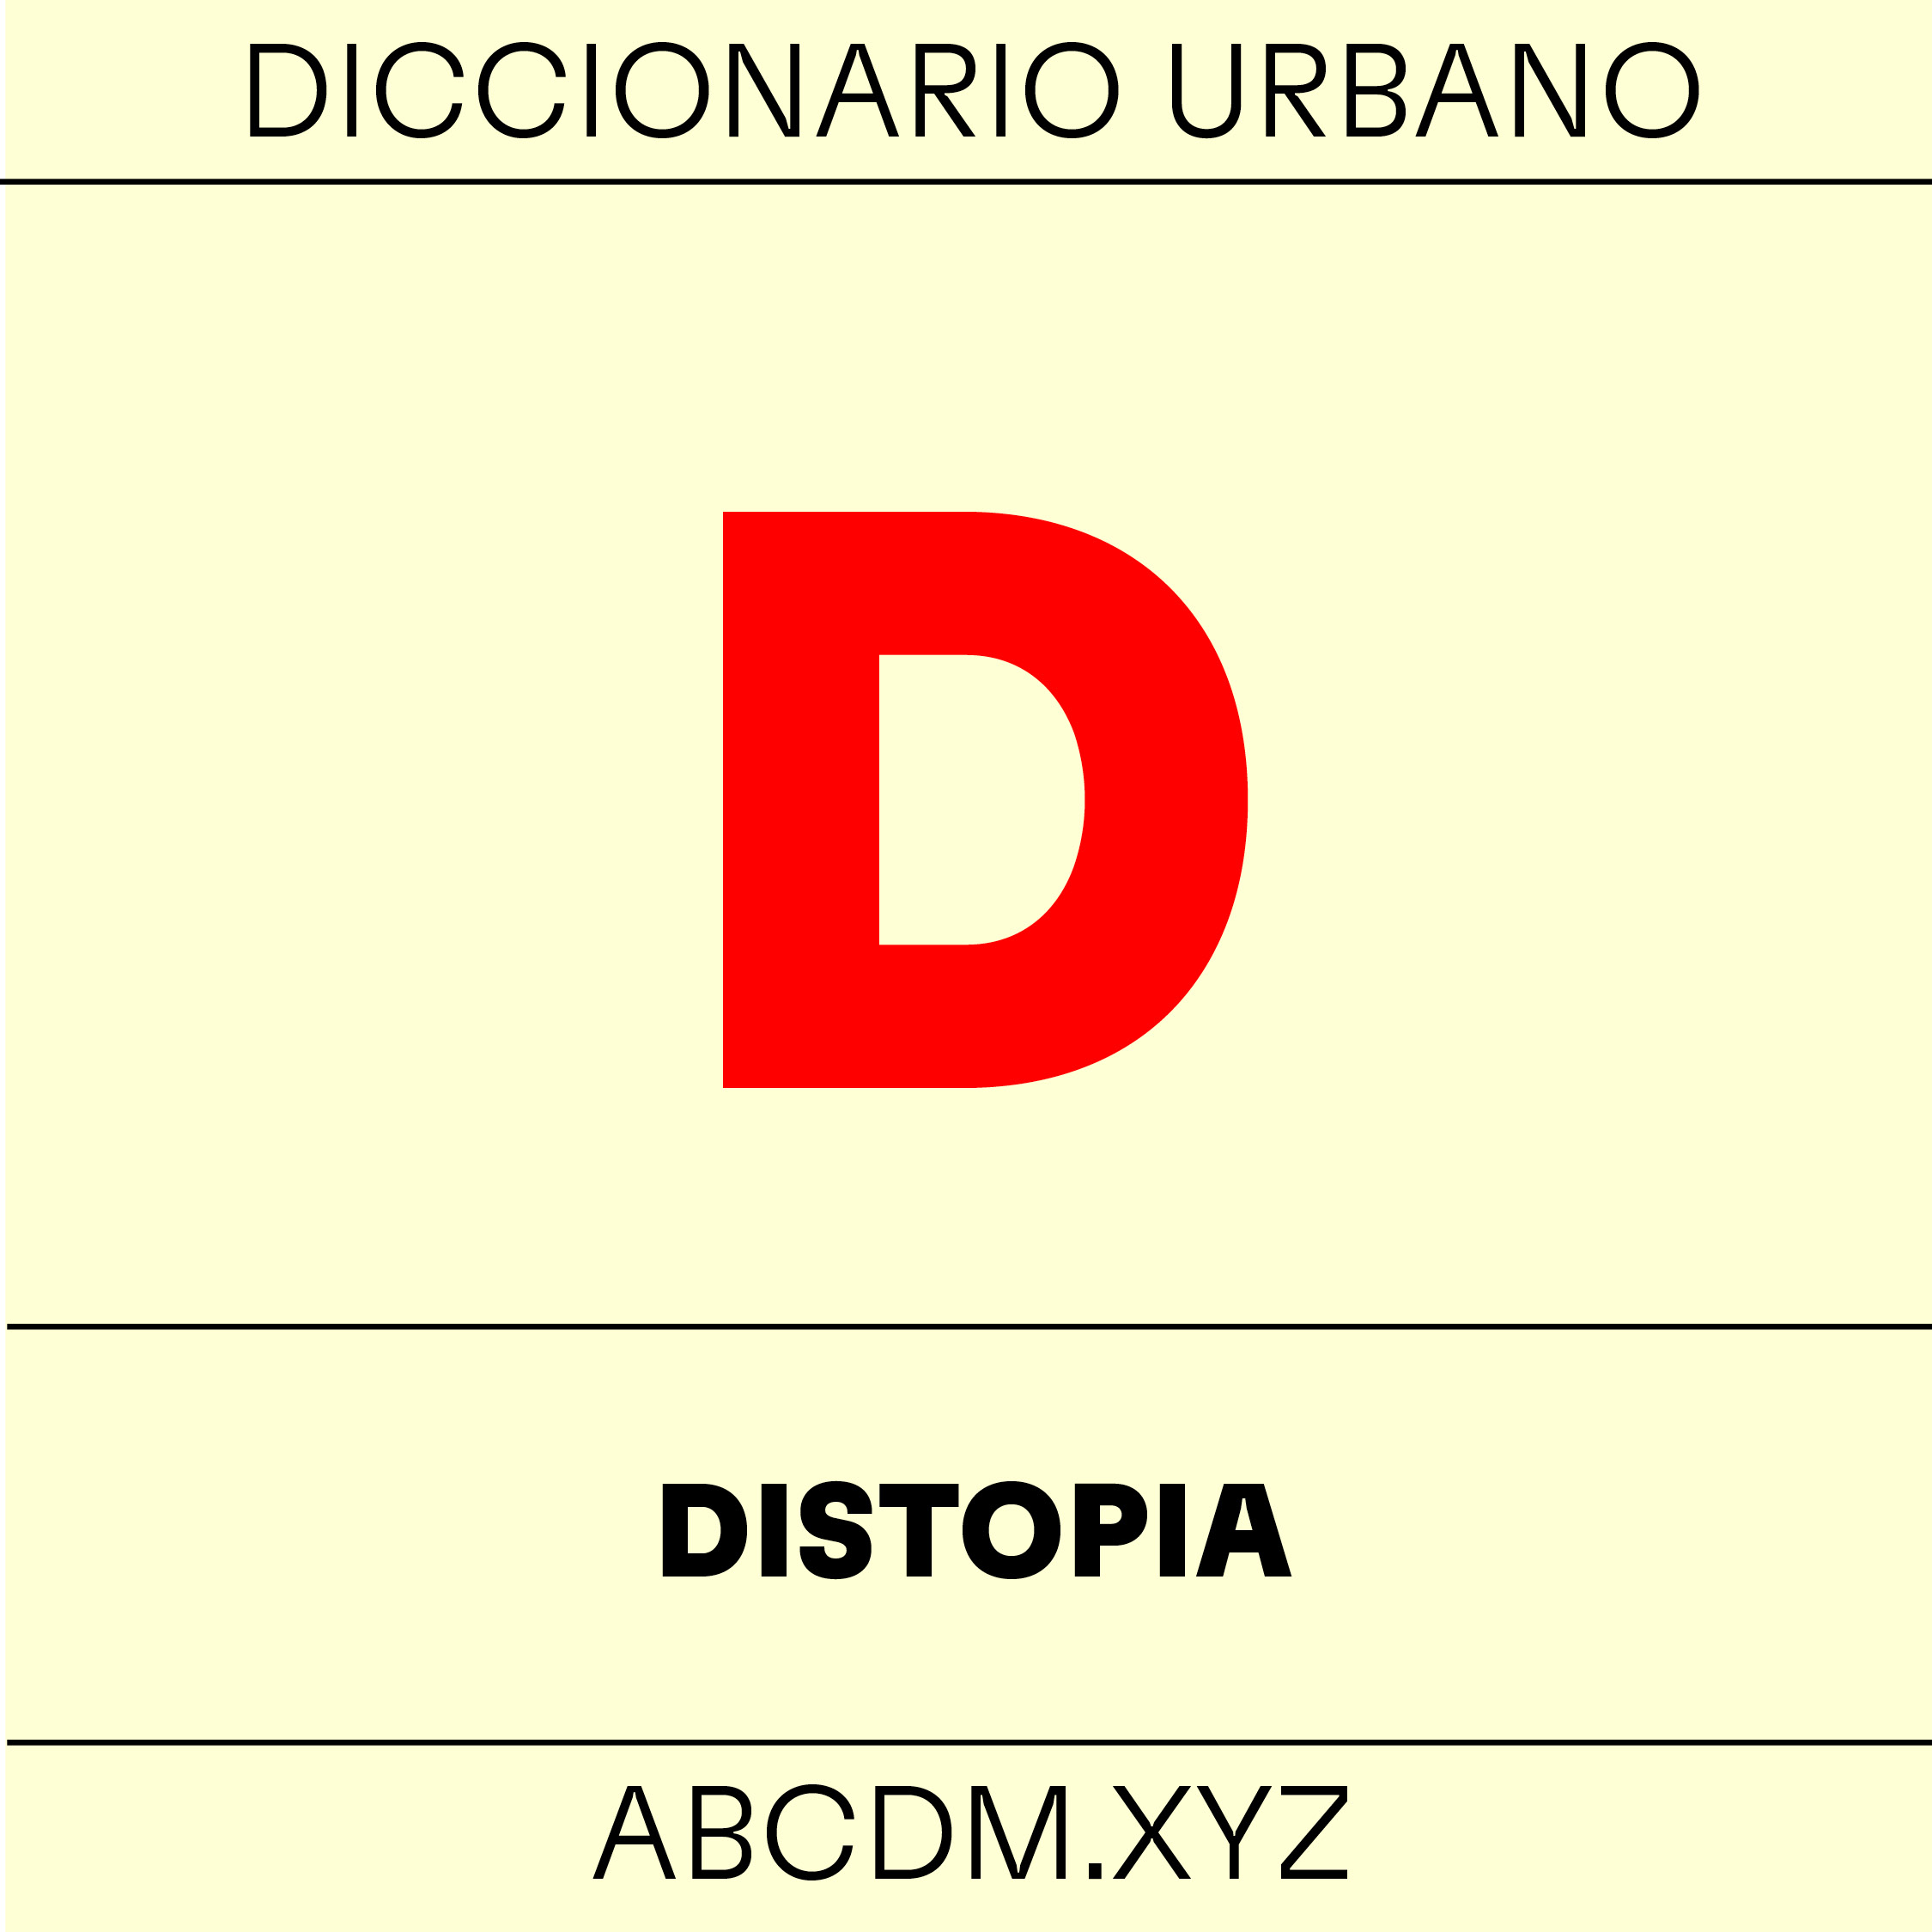 DISTOPIA